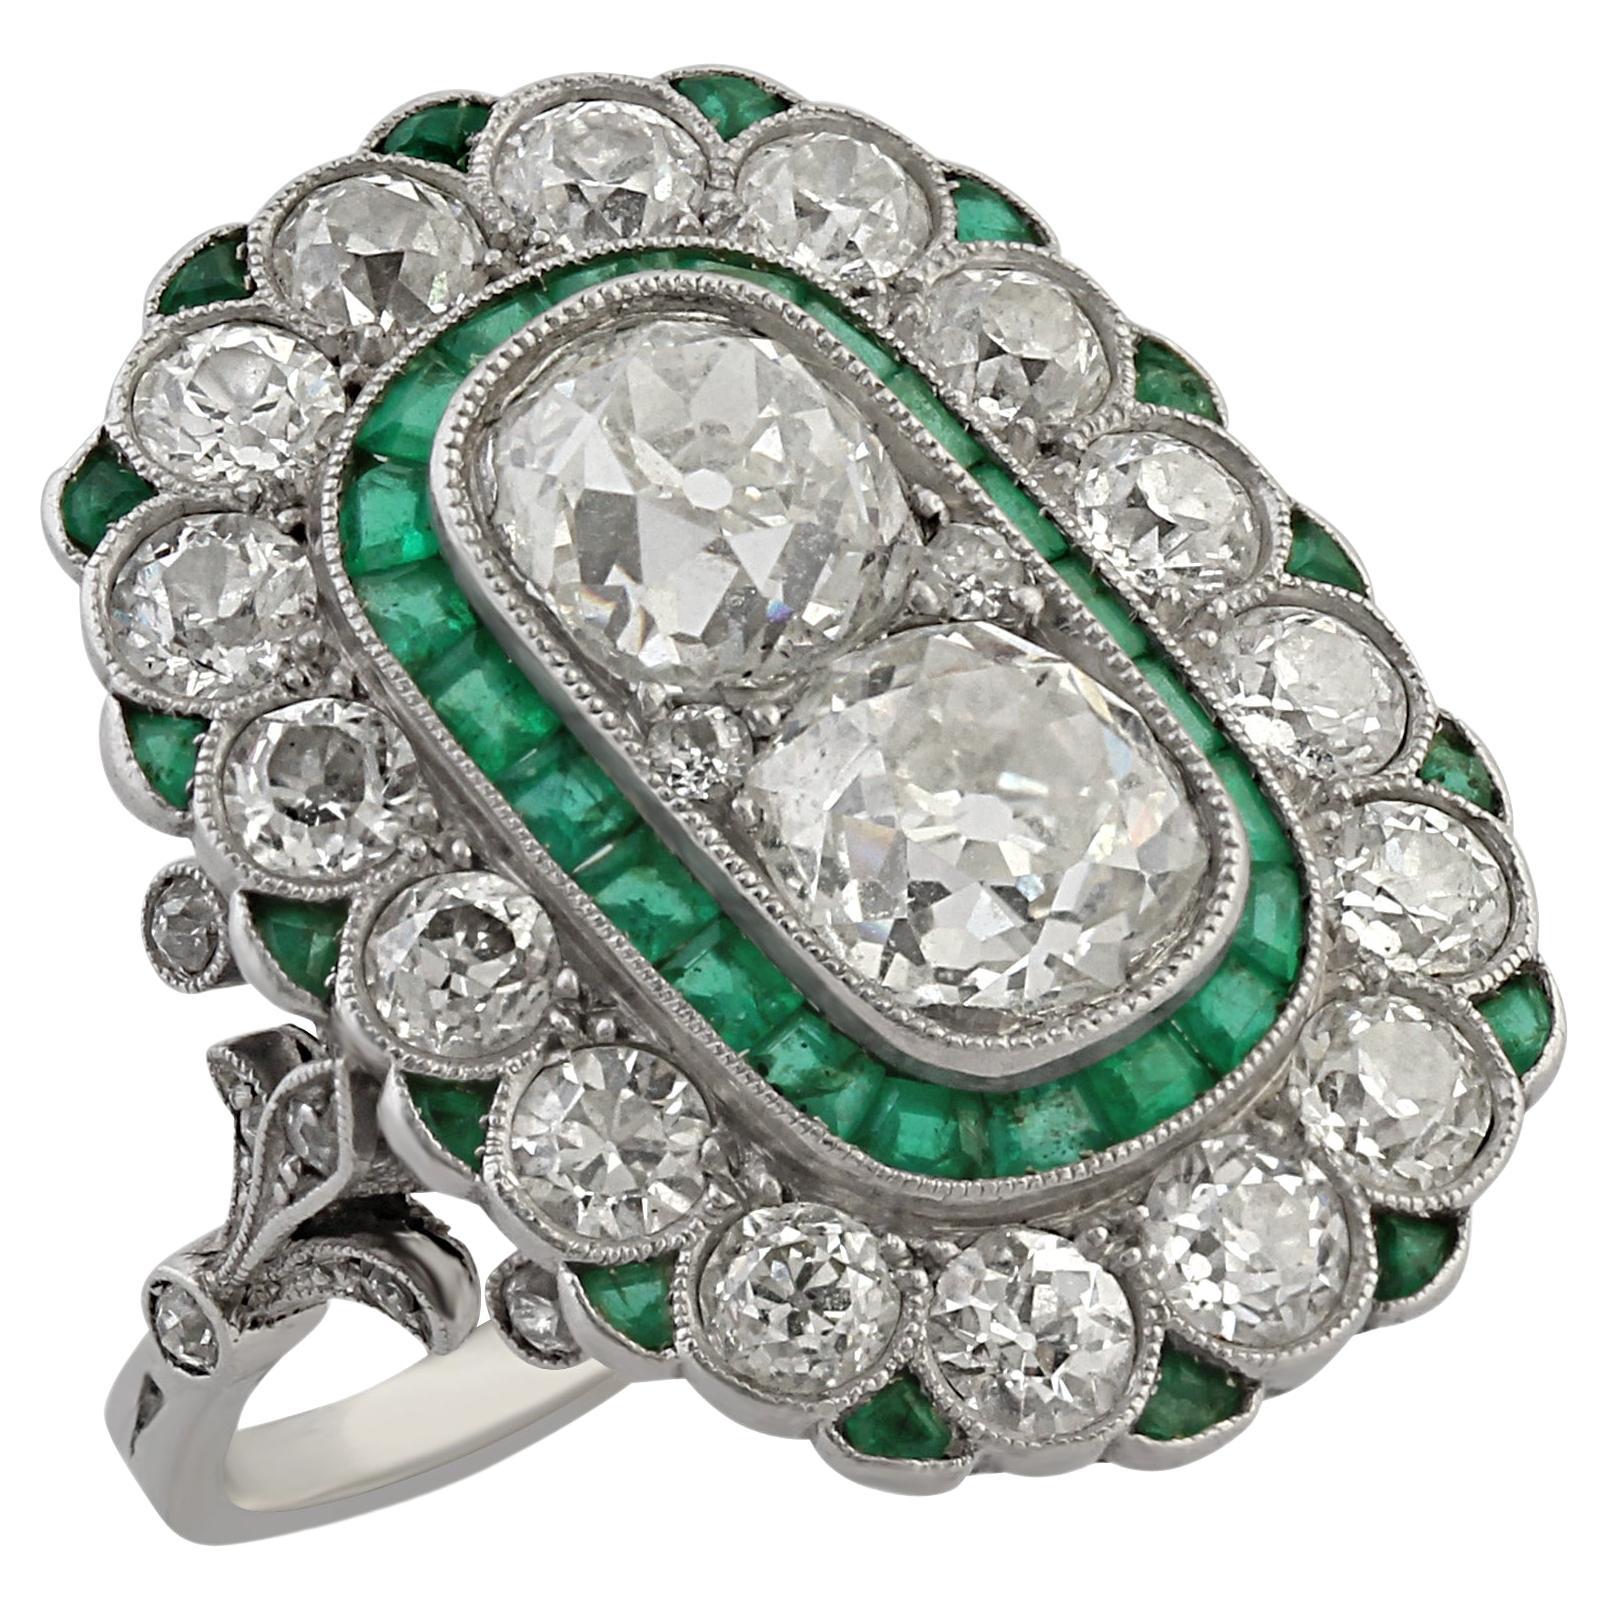 An Antique Old-Cut Diamond & Emerald Ring